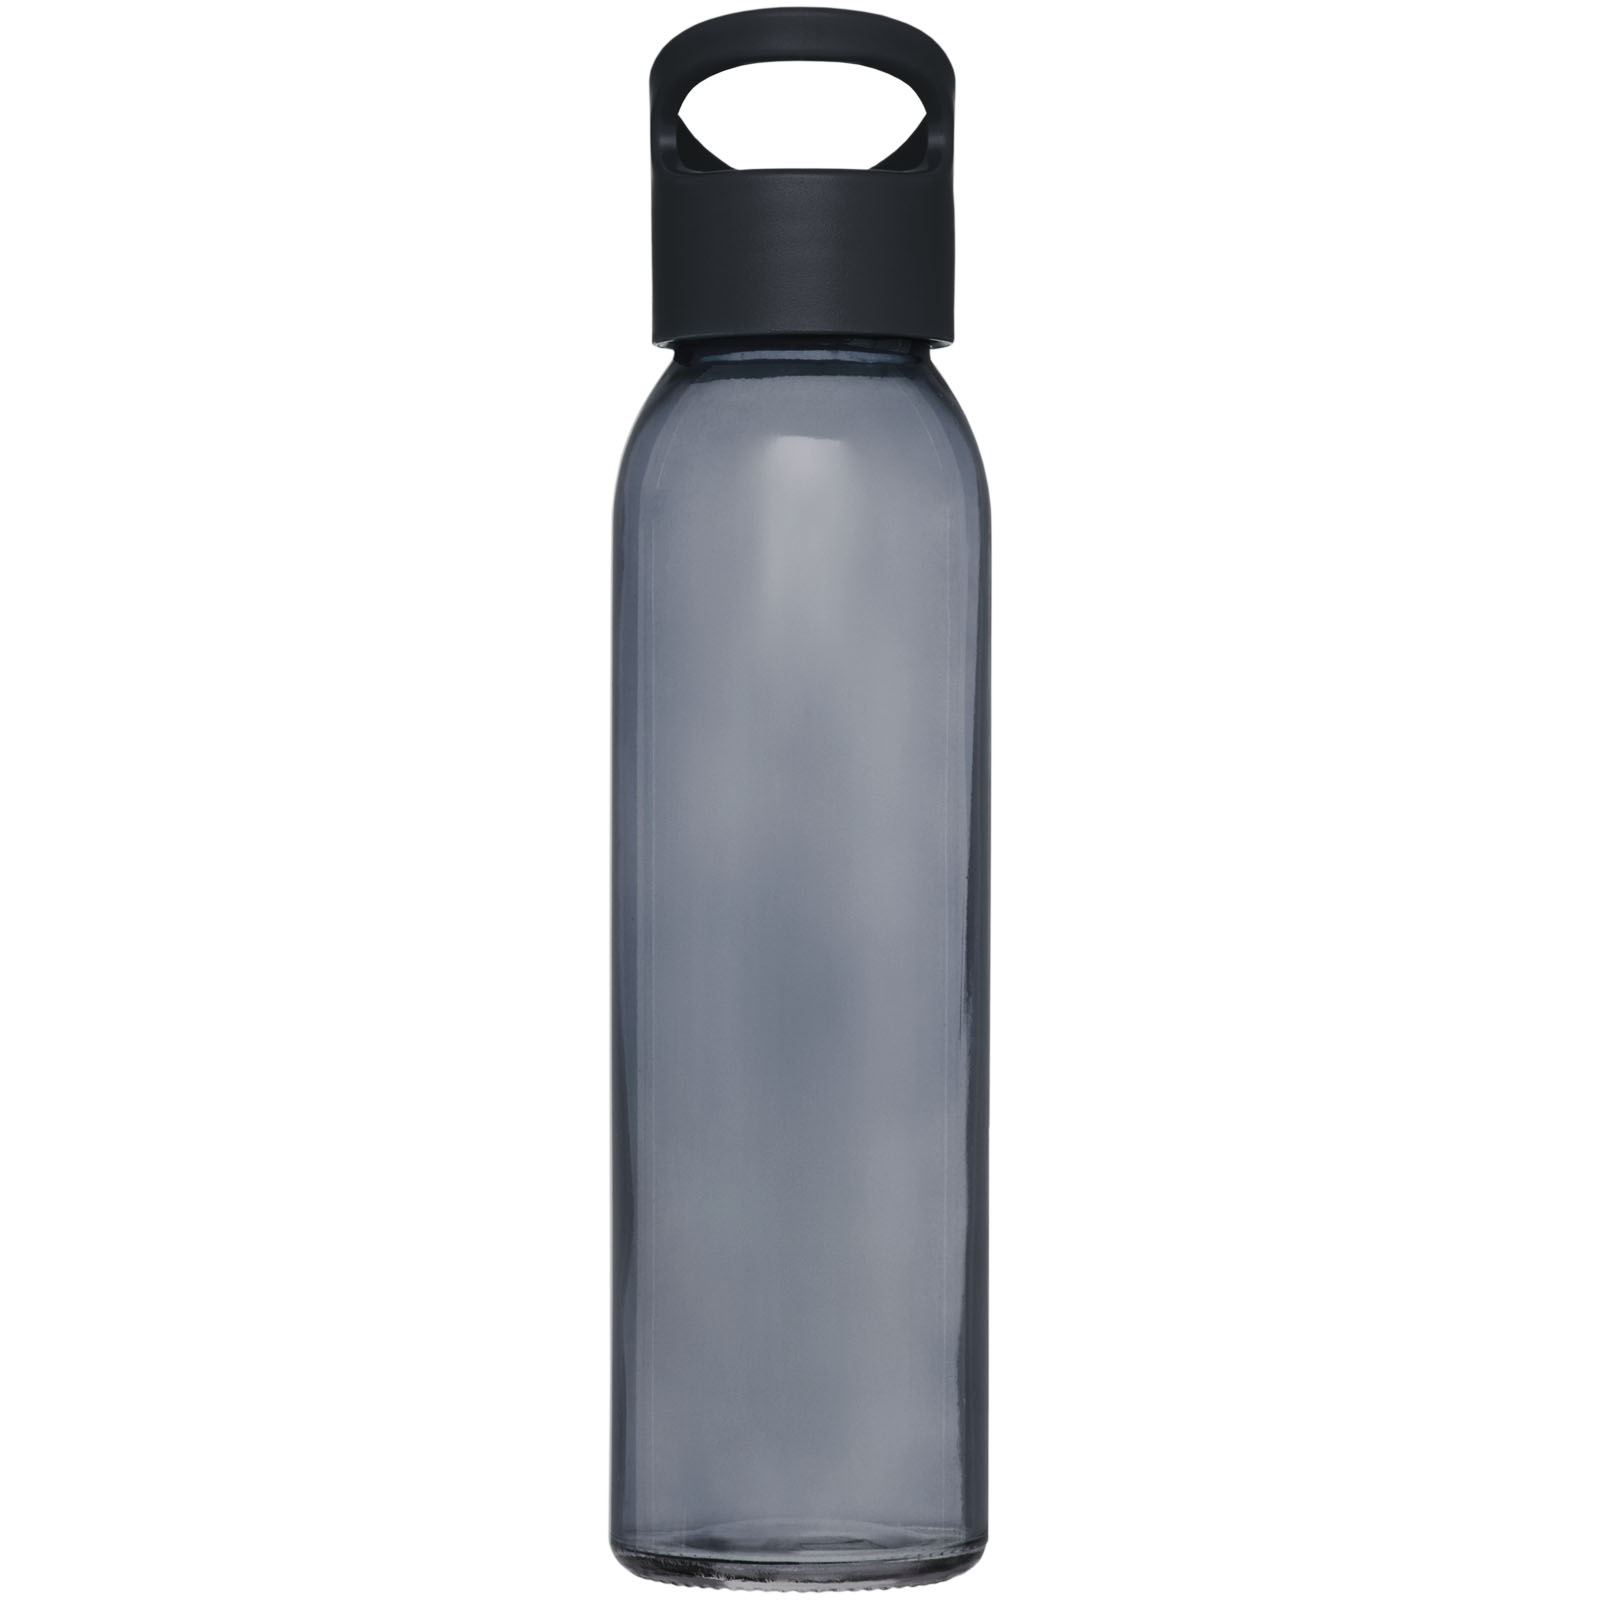 Advertising Water bottles - Sky 500 ml glass water bottle - 1